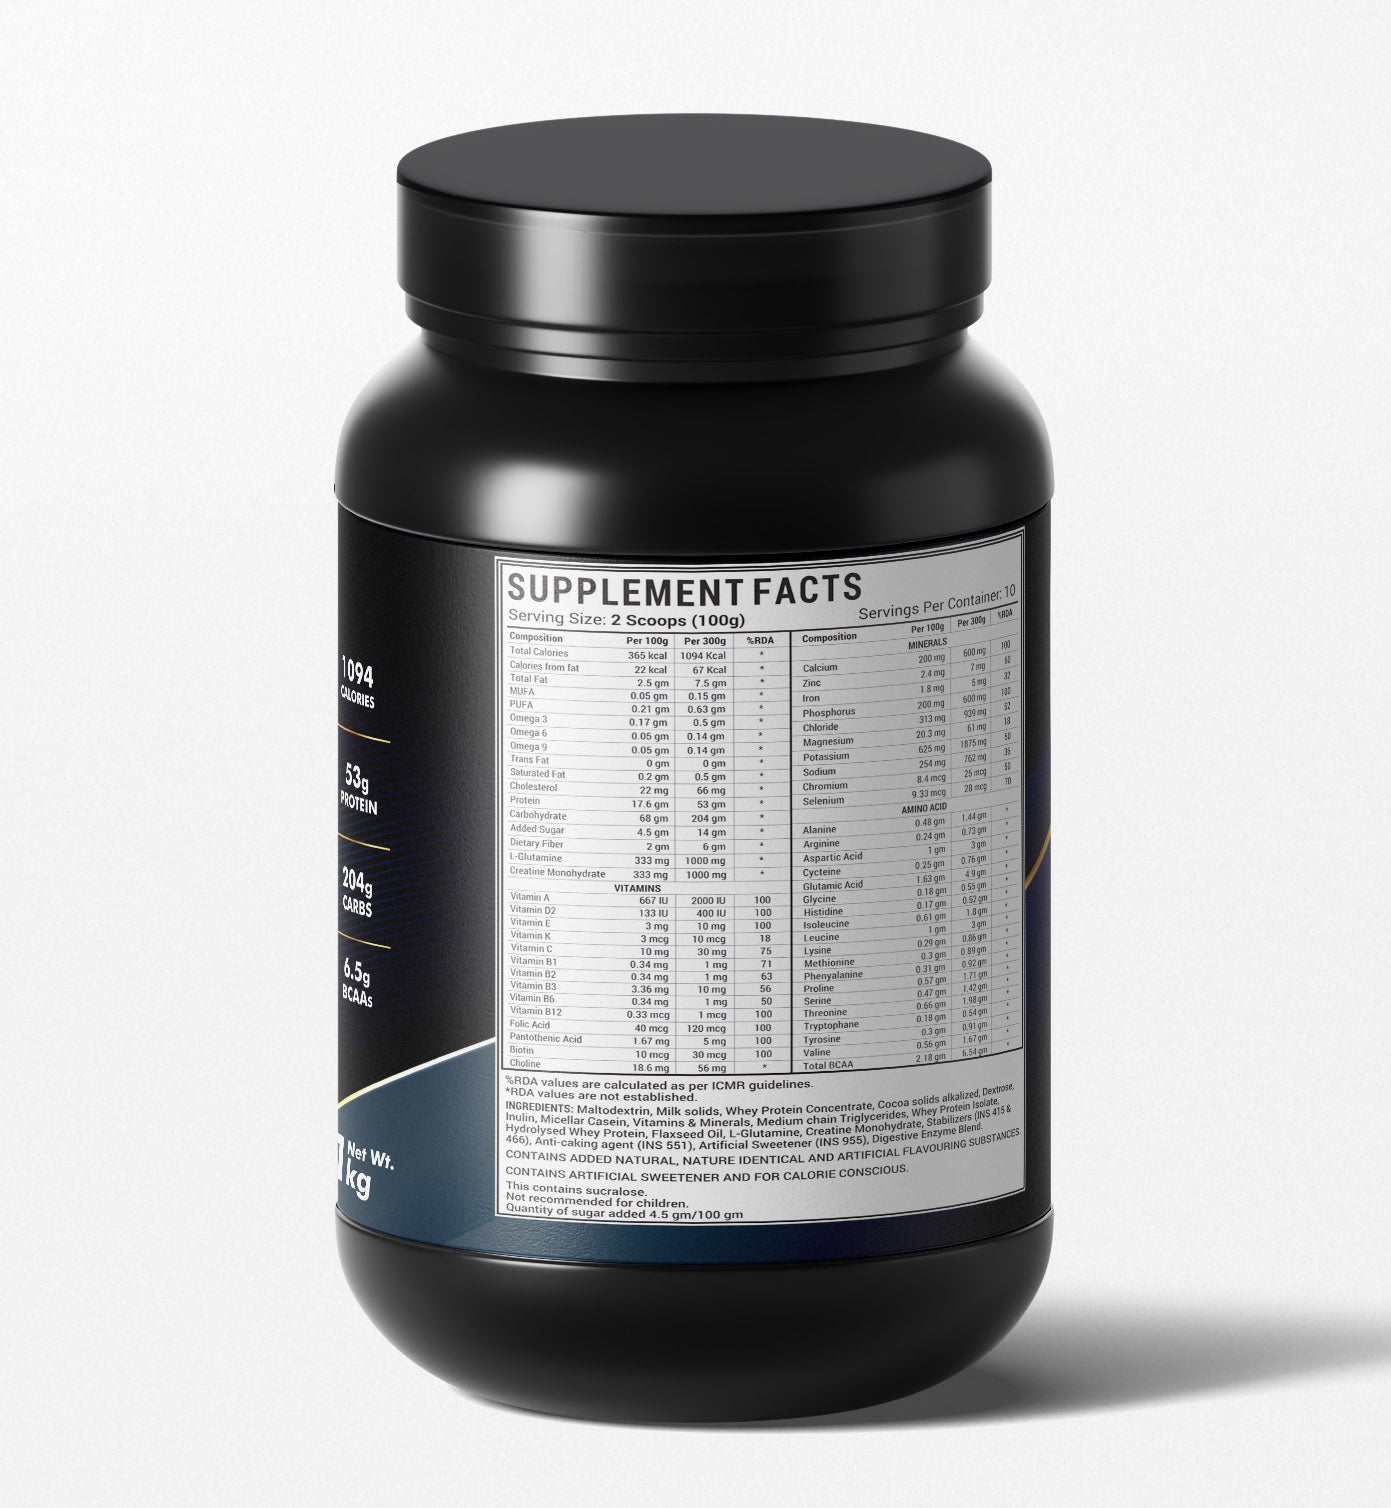 Livestamin Muscle Mass Gainer Body Building Protein Powder Supplement - 1 kg